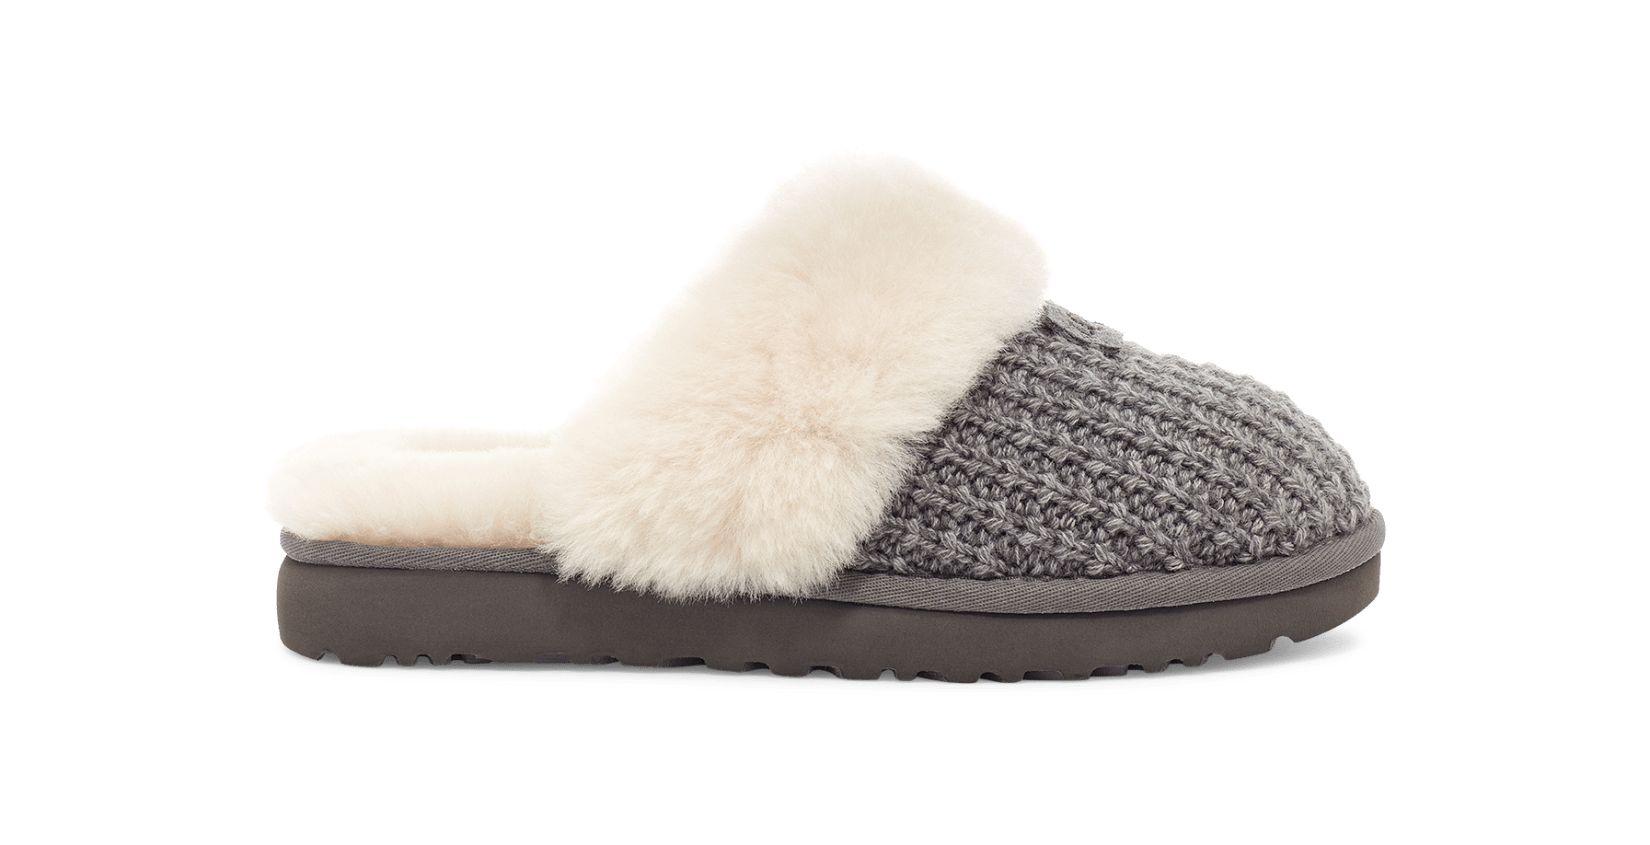 New Women's 100% UGG Brand 1117659 Cozy Cream Knit Soft Slipper Shoes | eBay